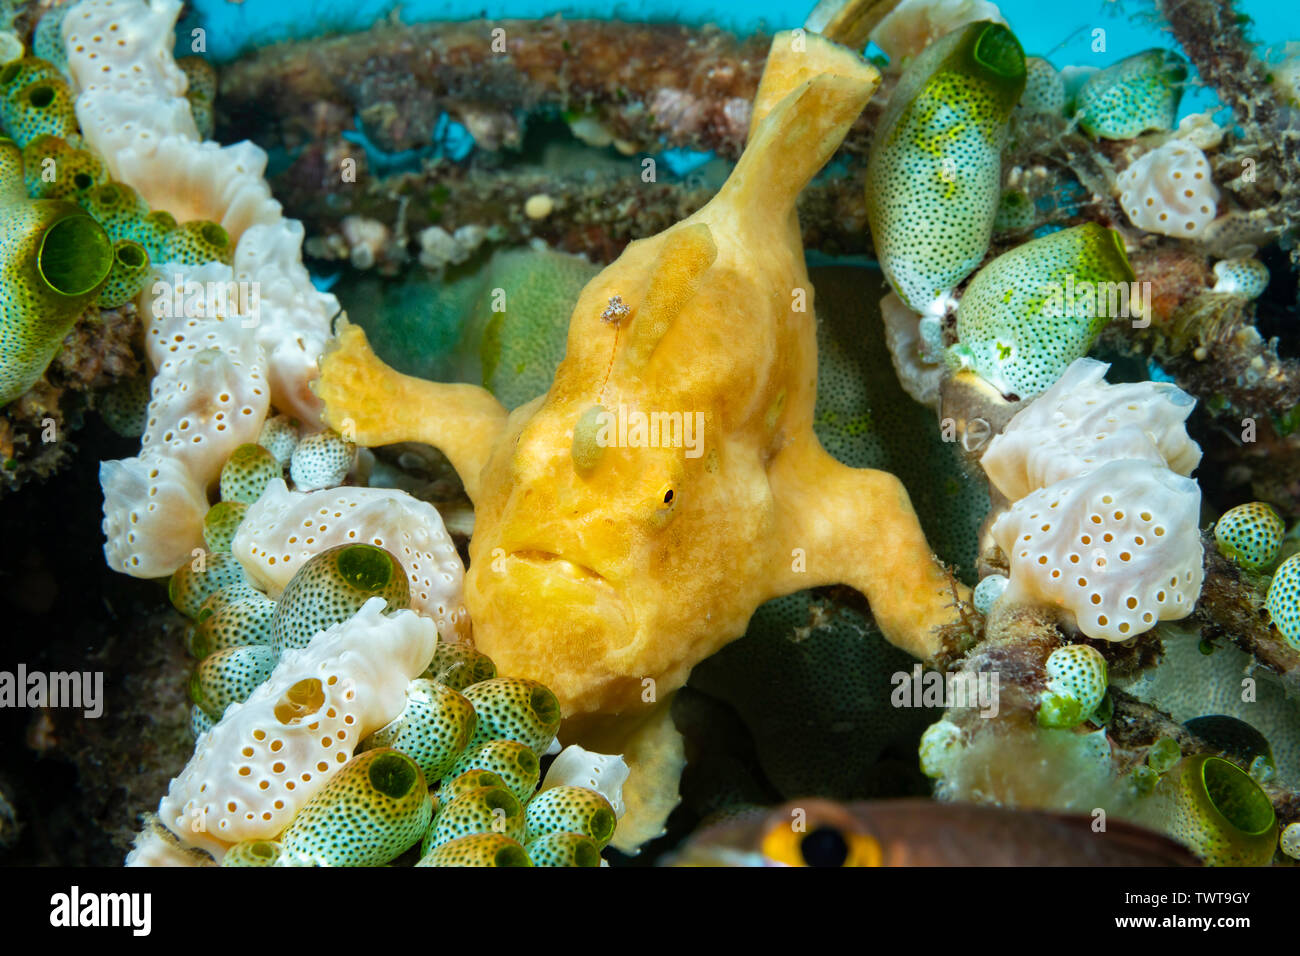 Una rana pescatrice presenta verrucosa, Antennarius maculatus, tra i tipi di tunicati, Filippine. Foto Stock